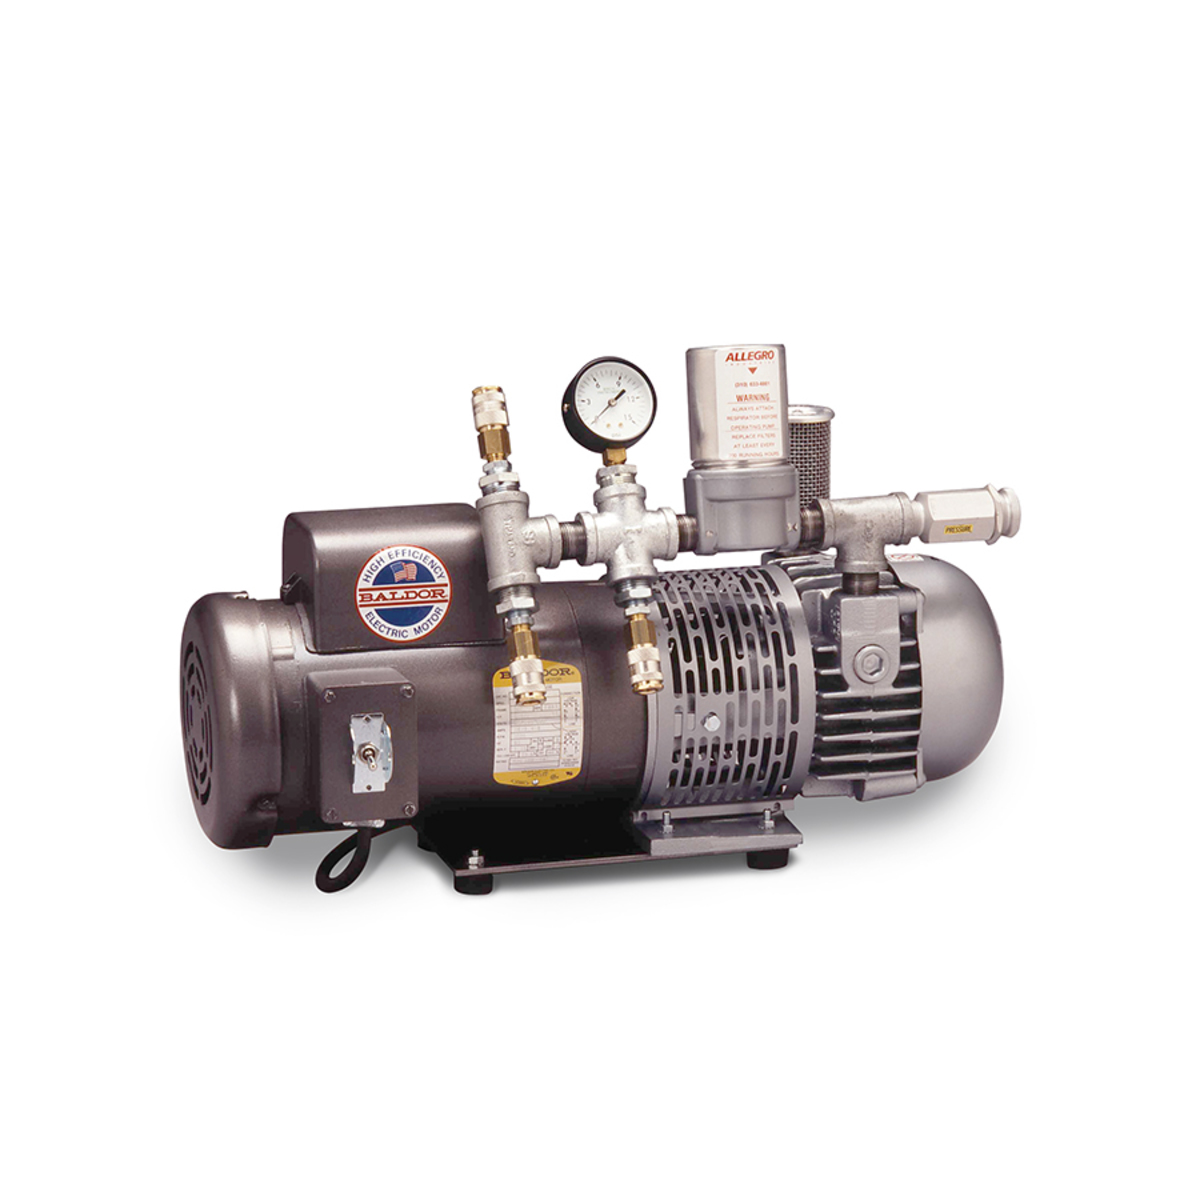 Allegro® Industries A-1500TE Ambient Air Pump